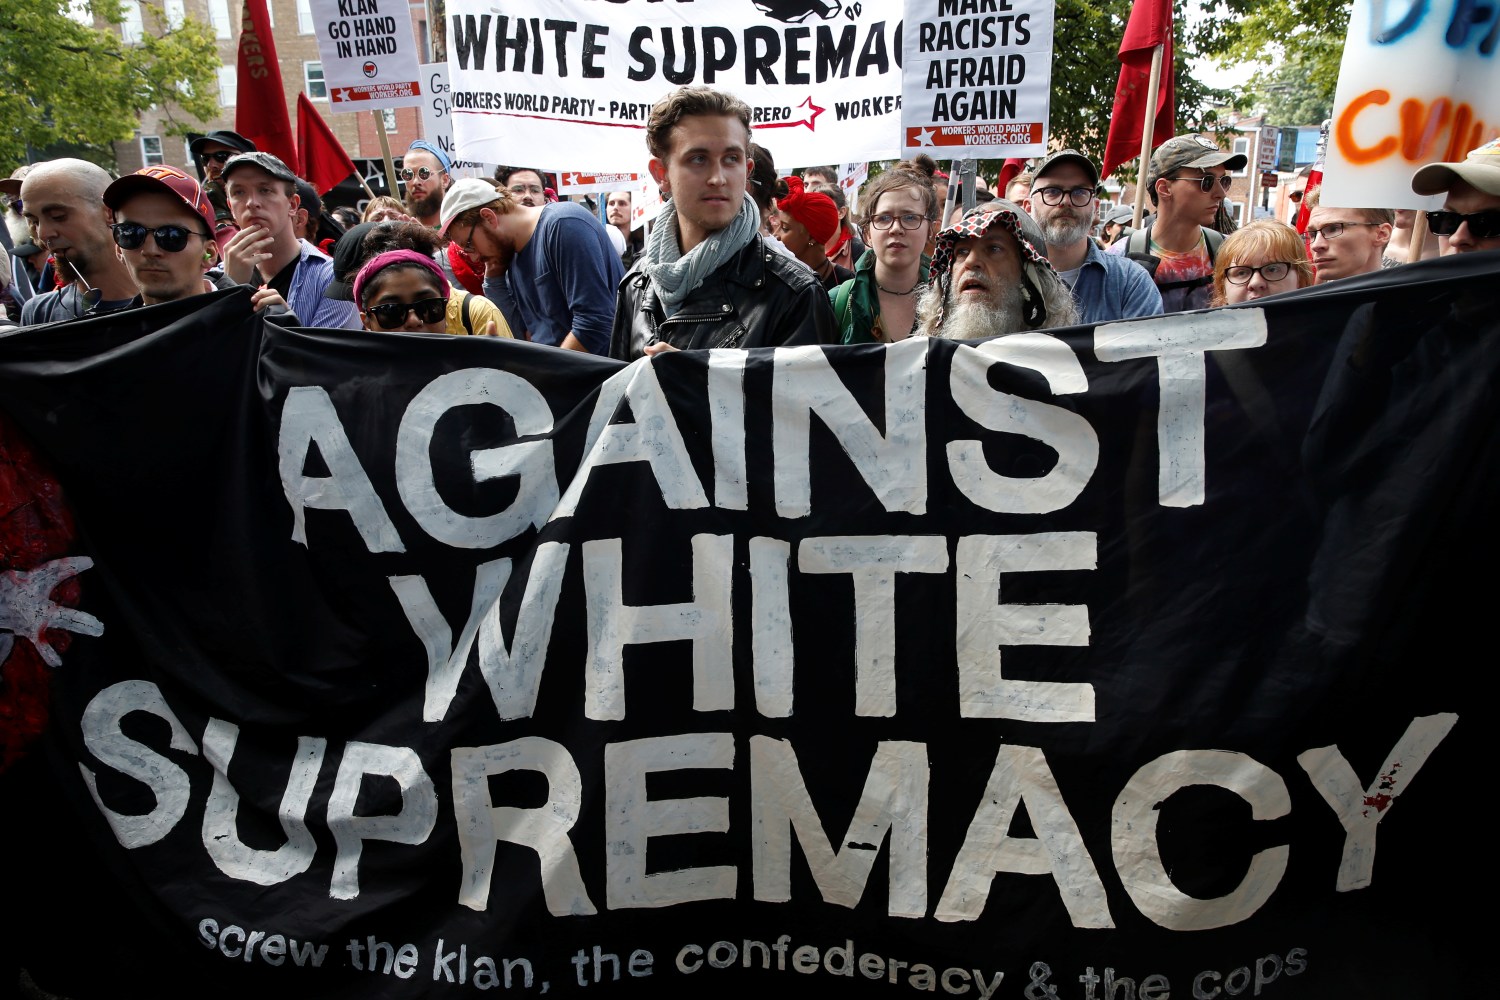 Protesters against white supremacy in Charlottesville, VA